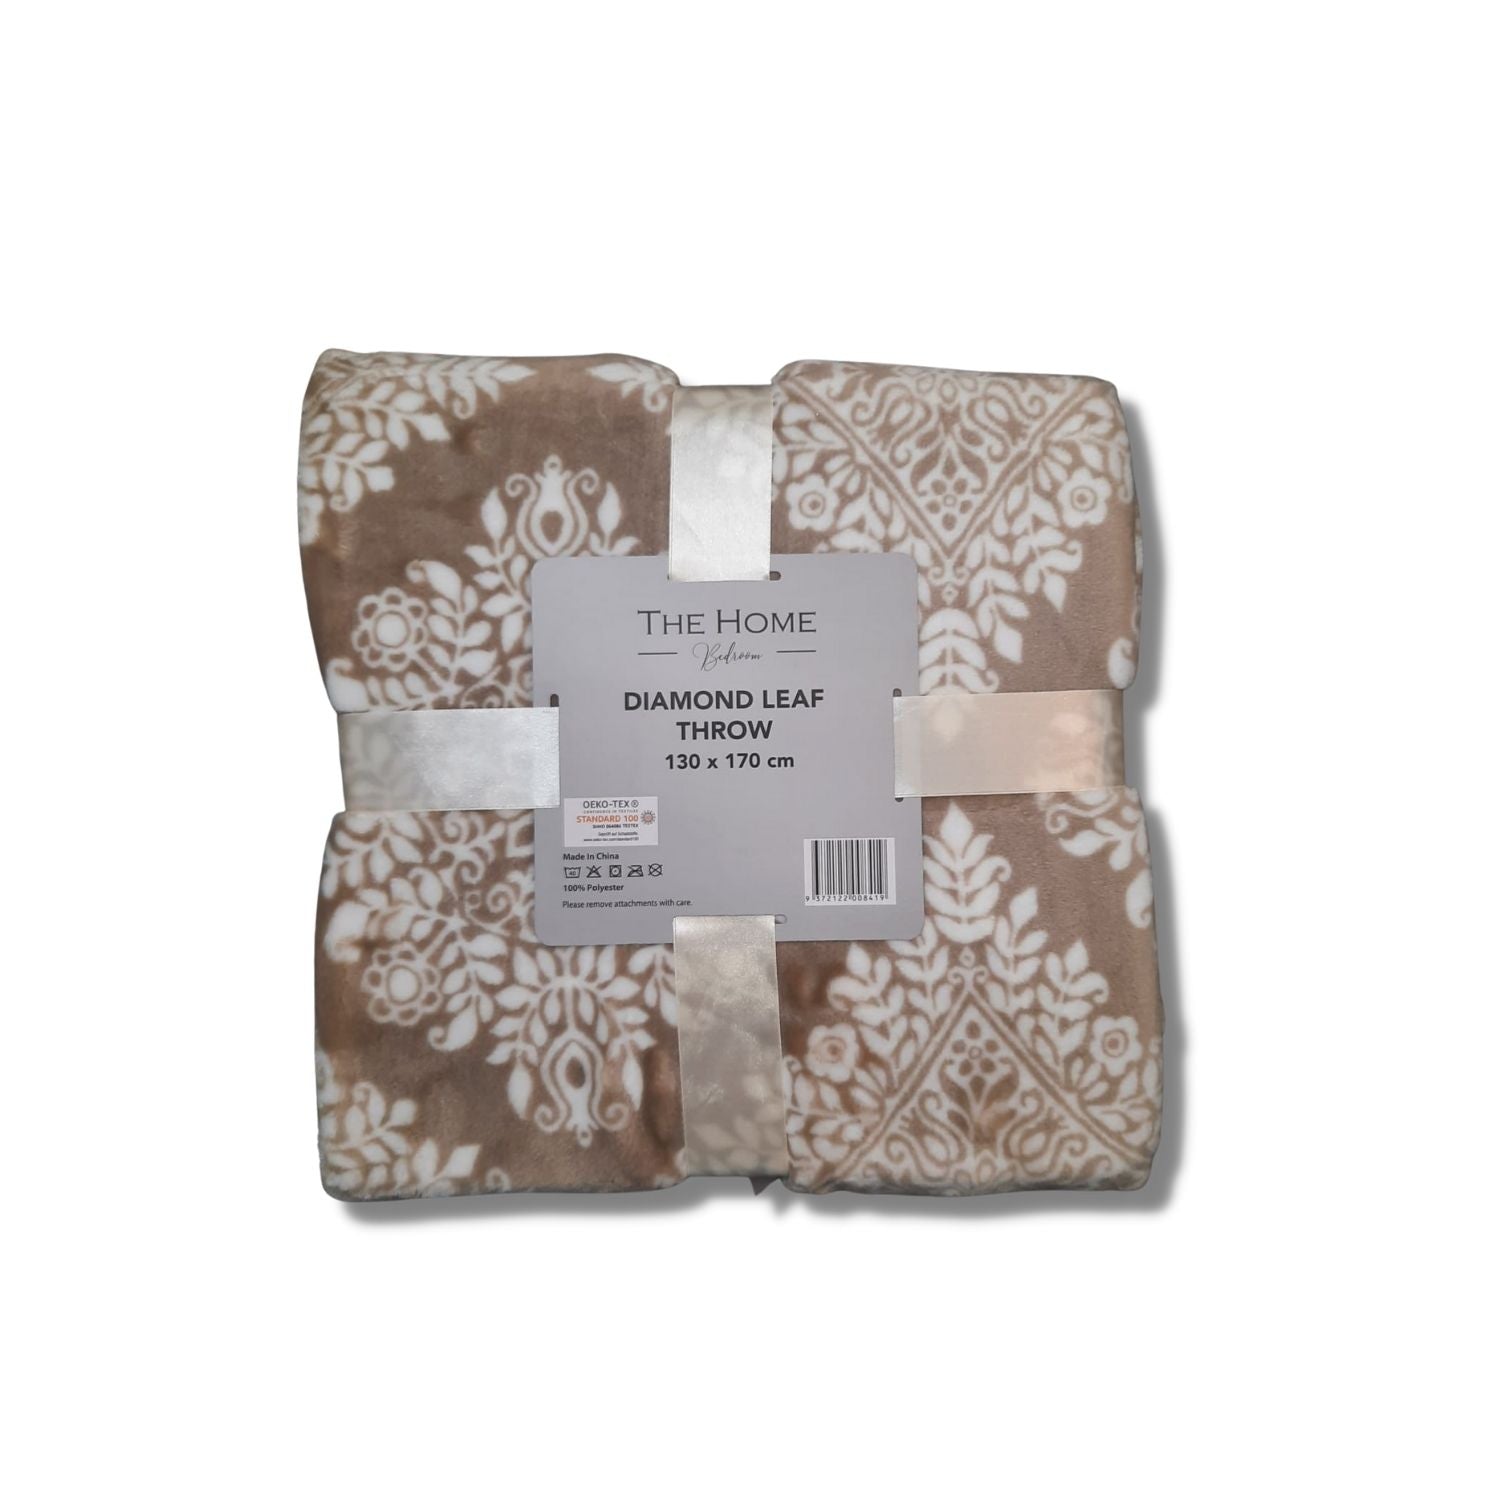 The Home Bedroom Diamond Leaf Blanket 130cm x 170cm - Beige 1 Shaws Department Stores